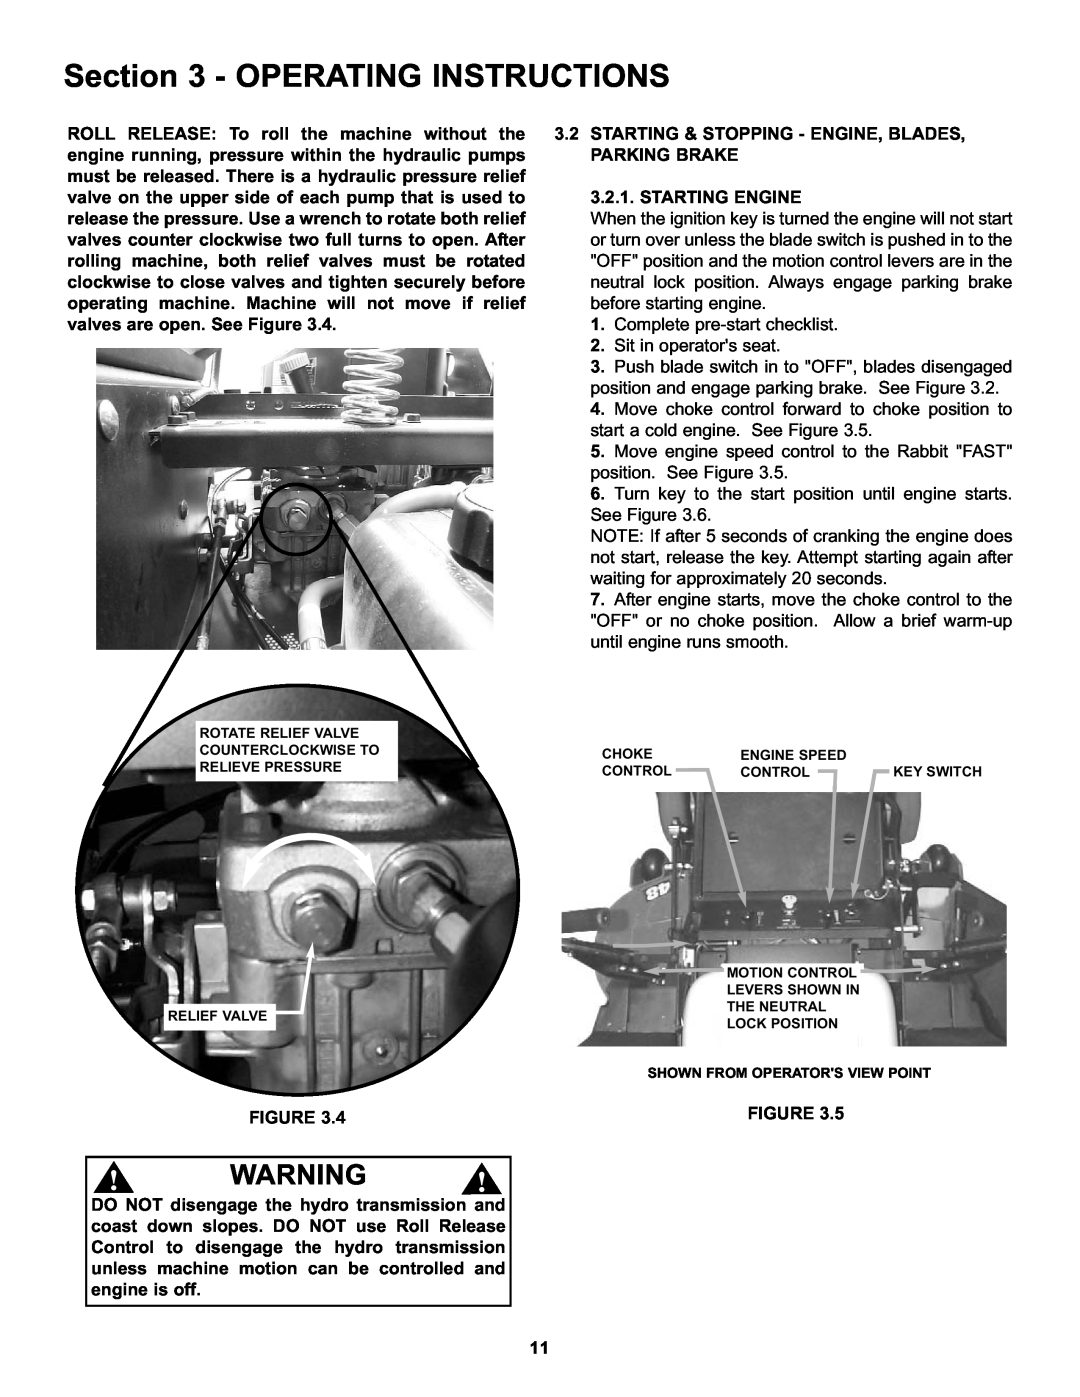 Snapper CZT19481KWV Operating Instructions, Starting & Stopping - Engine, Blades, Parking Brake, Starting Engine 